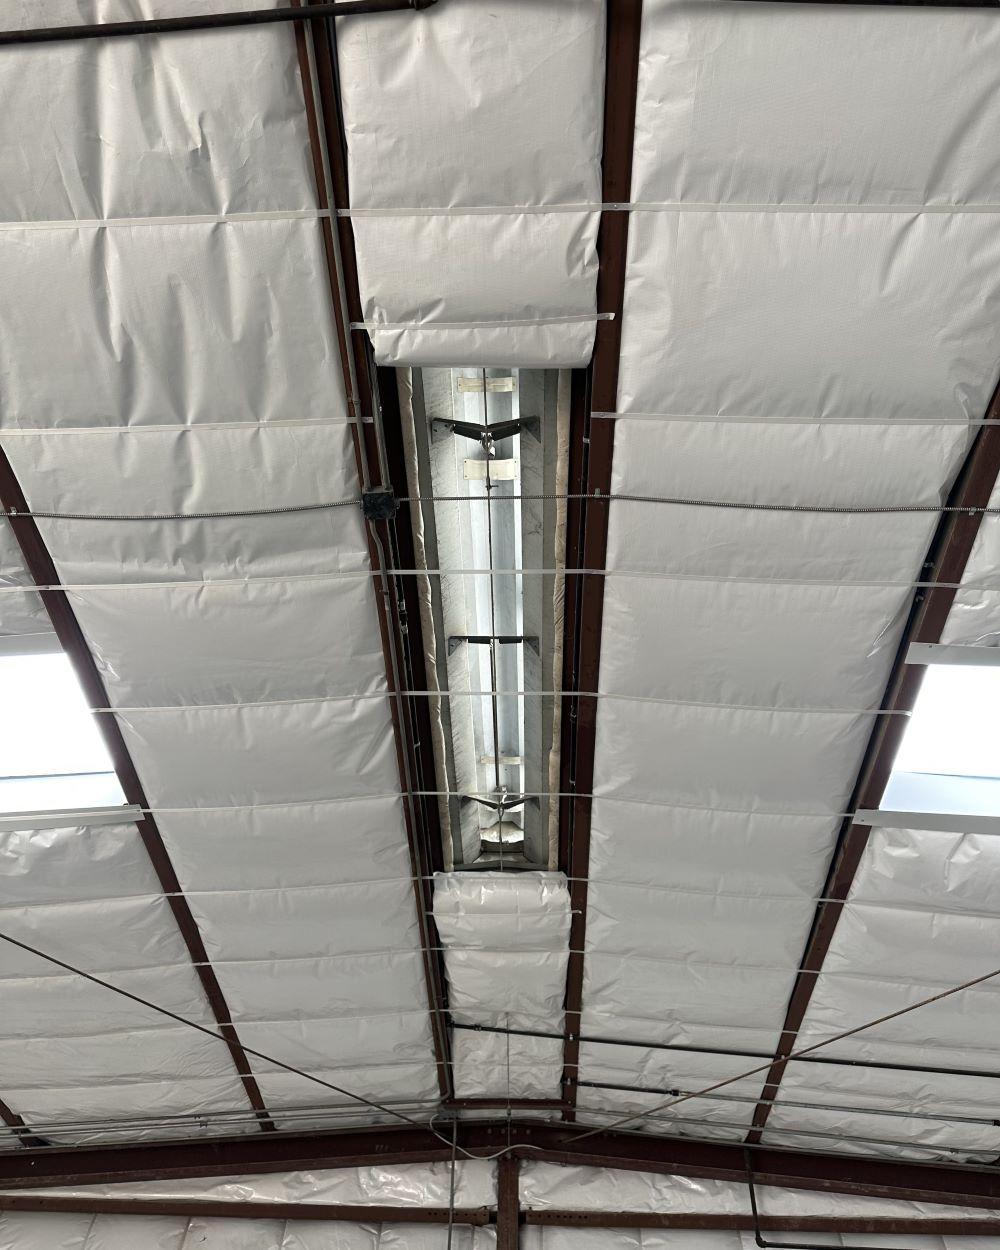 Metal roof insulation around ridgevent